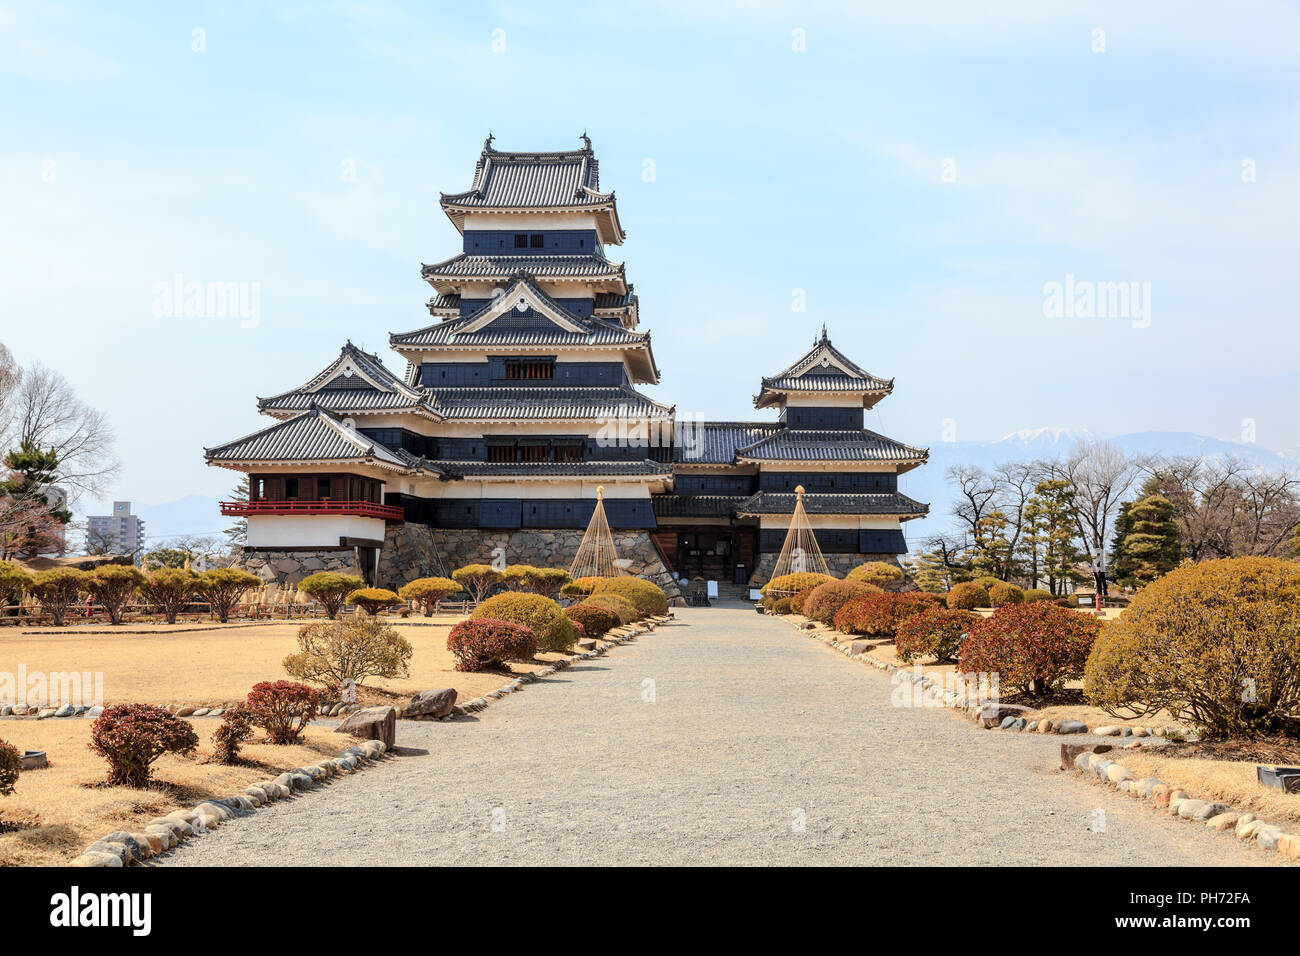 El castillo Matsumoto negro Foto de stock